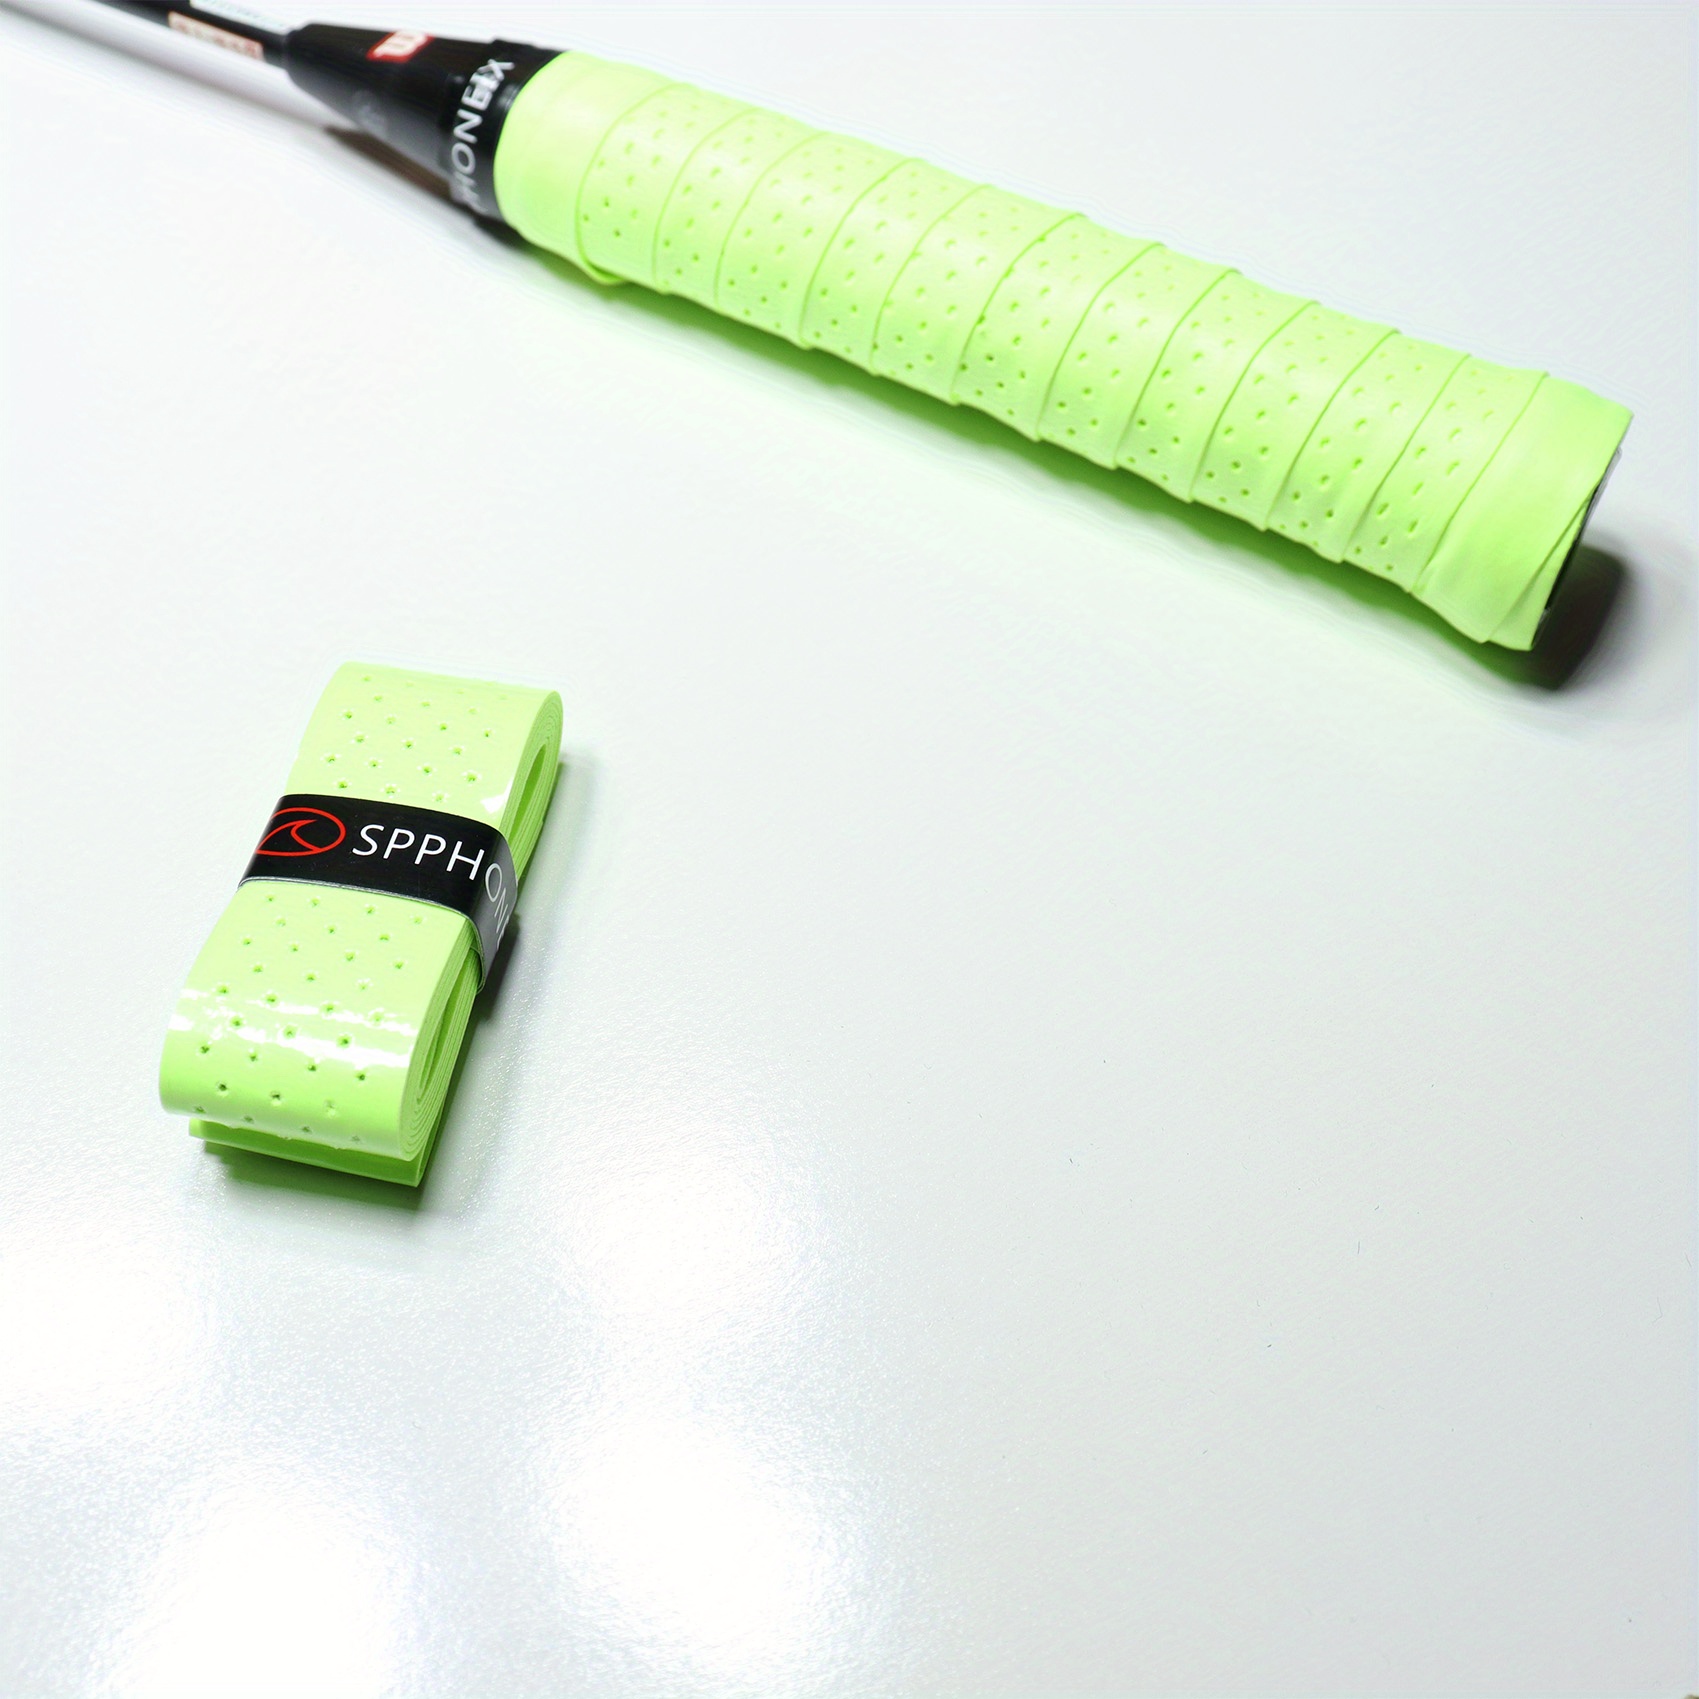 PU GRIP TAPE Anti-slip Sweat Absorbed Tape Badminton $6.28 - PicClick AU